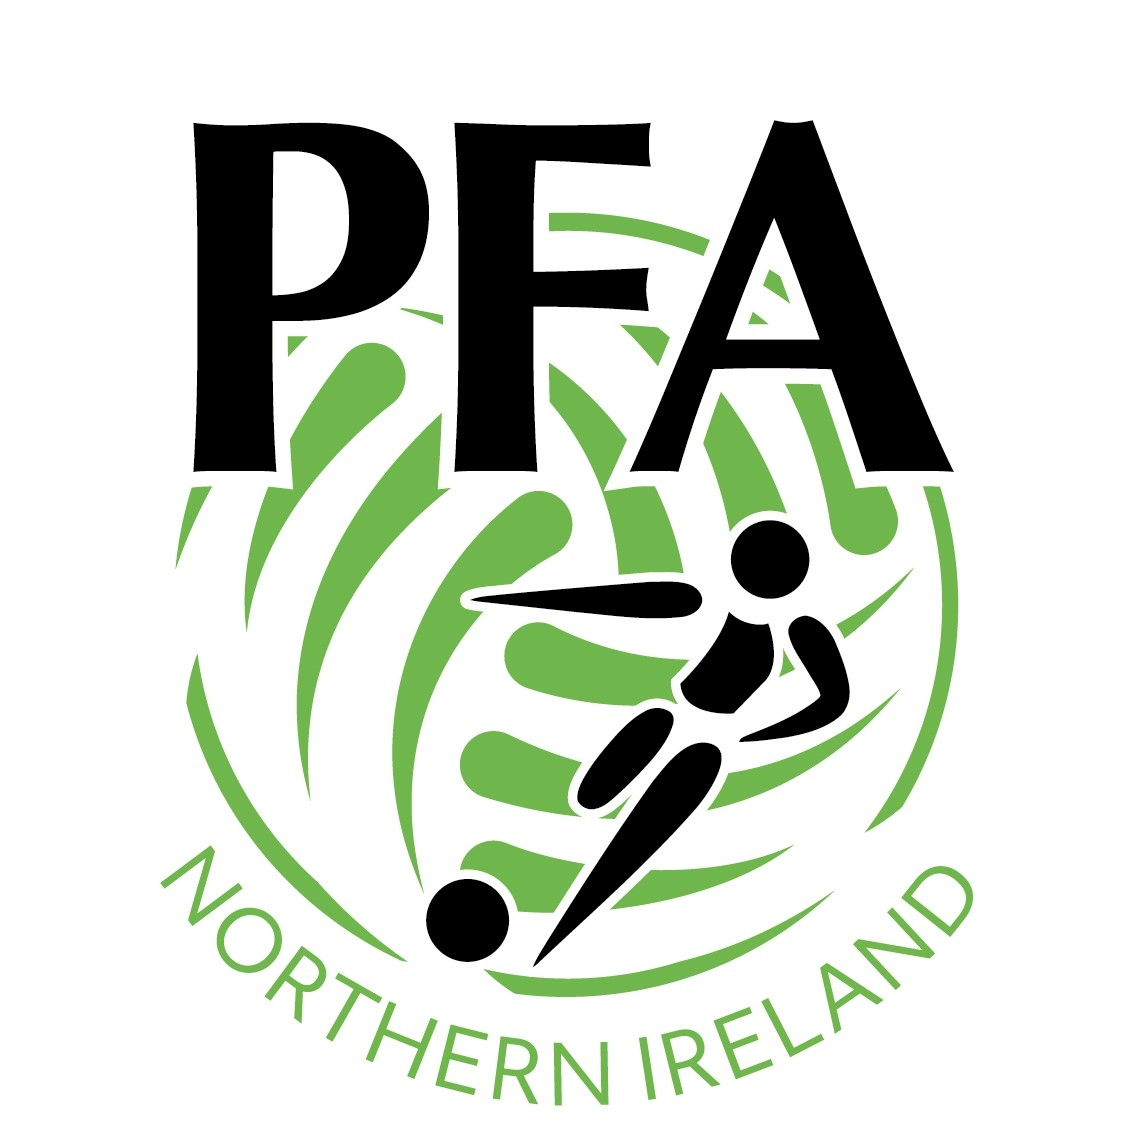 PFA Northern Ireland Logo